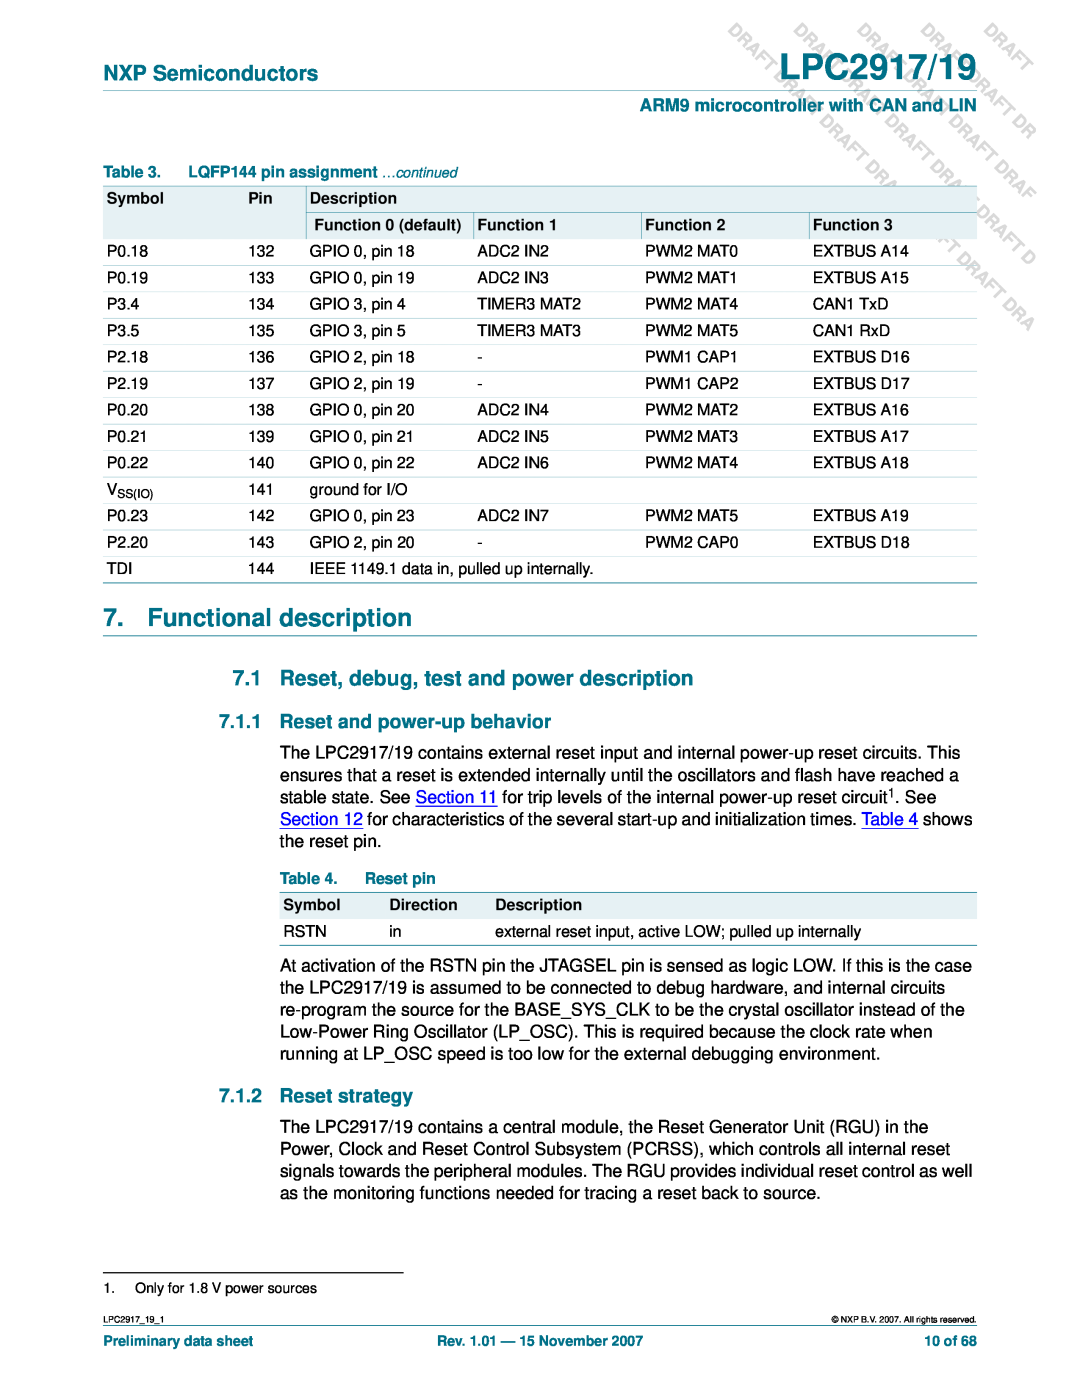 NXP Semiconductors LPC2919 Functional description, Reset, debug, test and power description, Reset and power-up behavior 